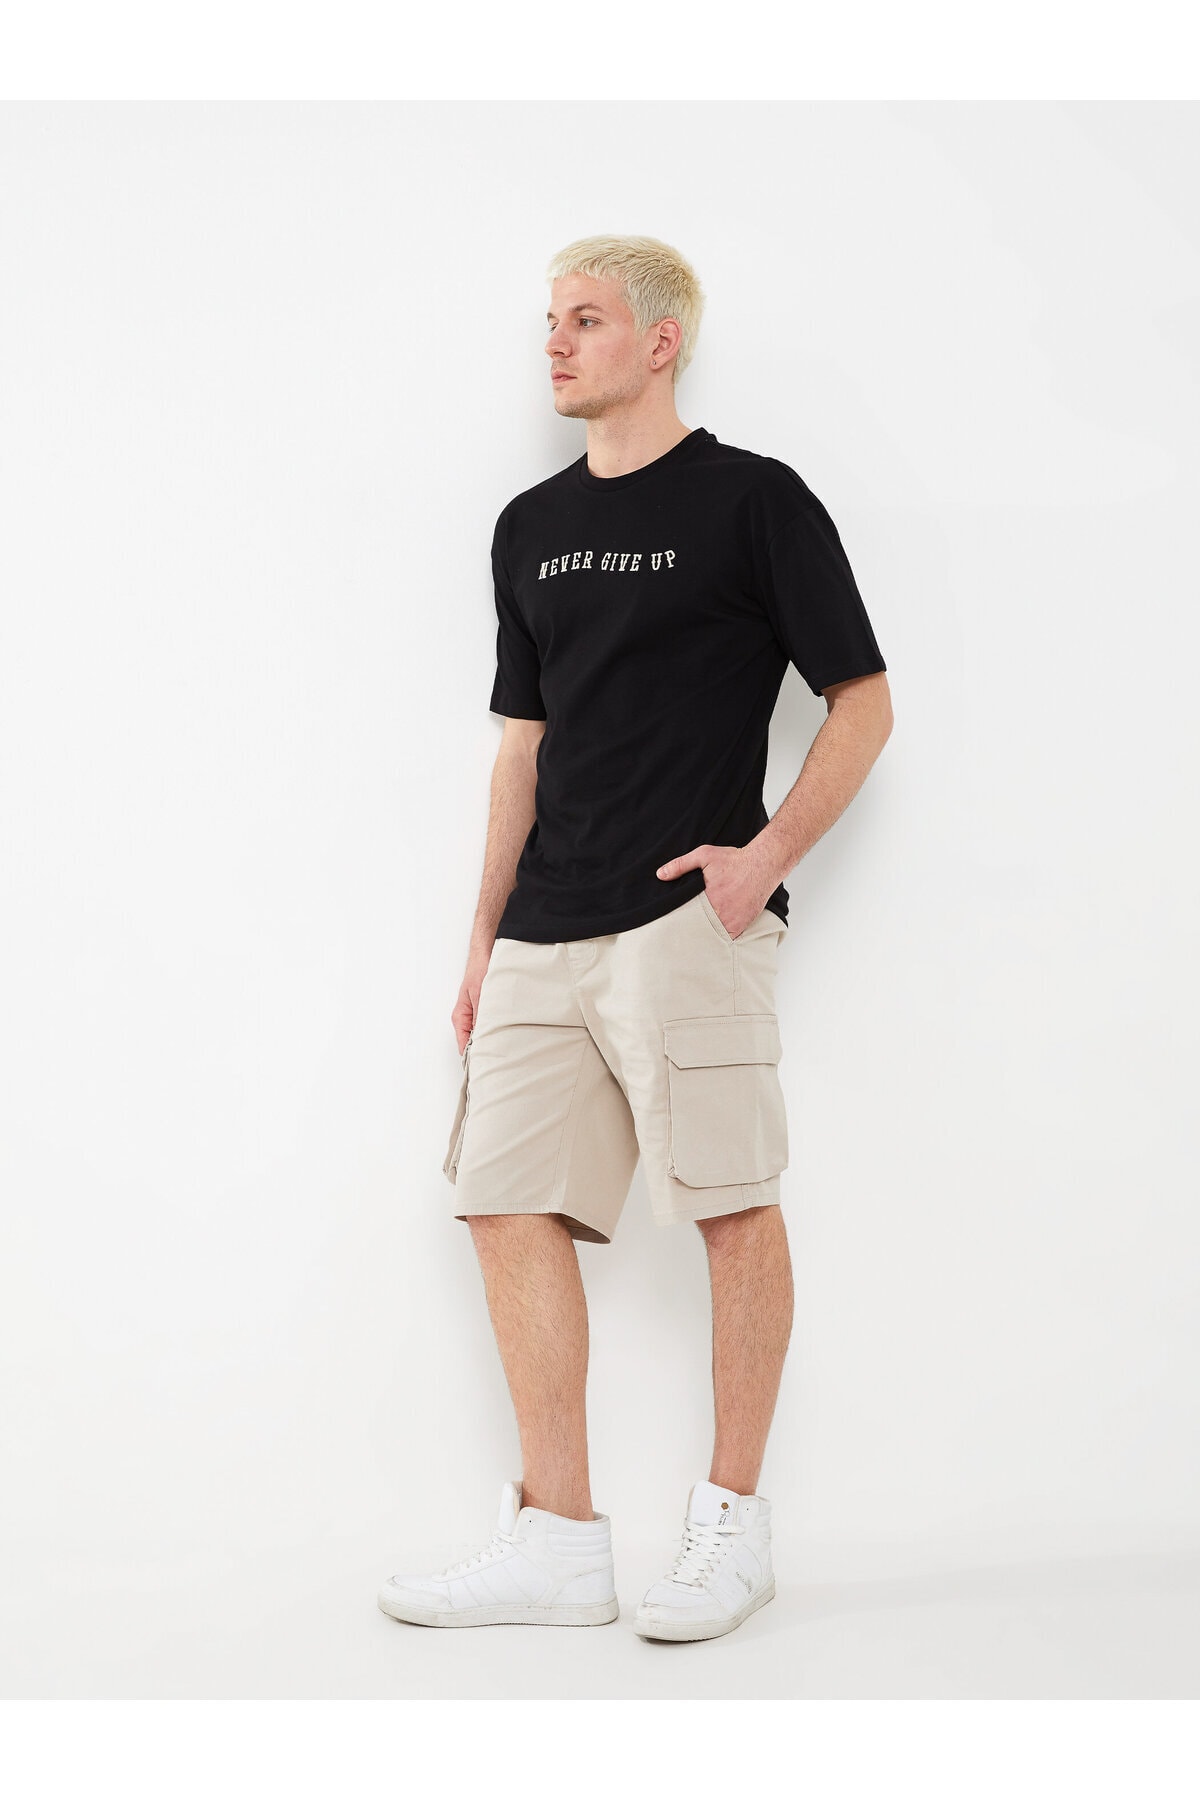 LC Waikiki Men's Standard Fit Cargo Shorts